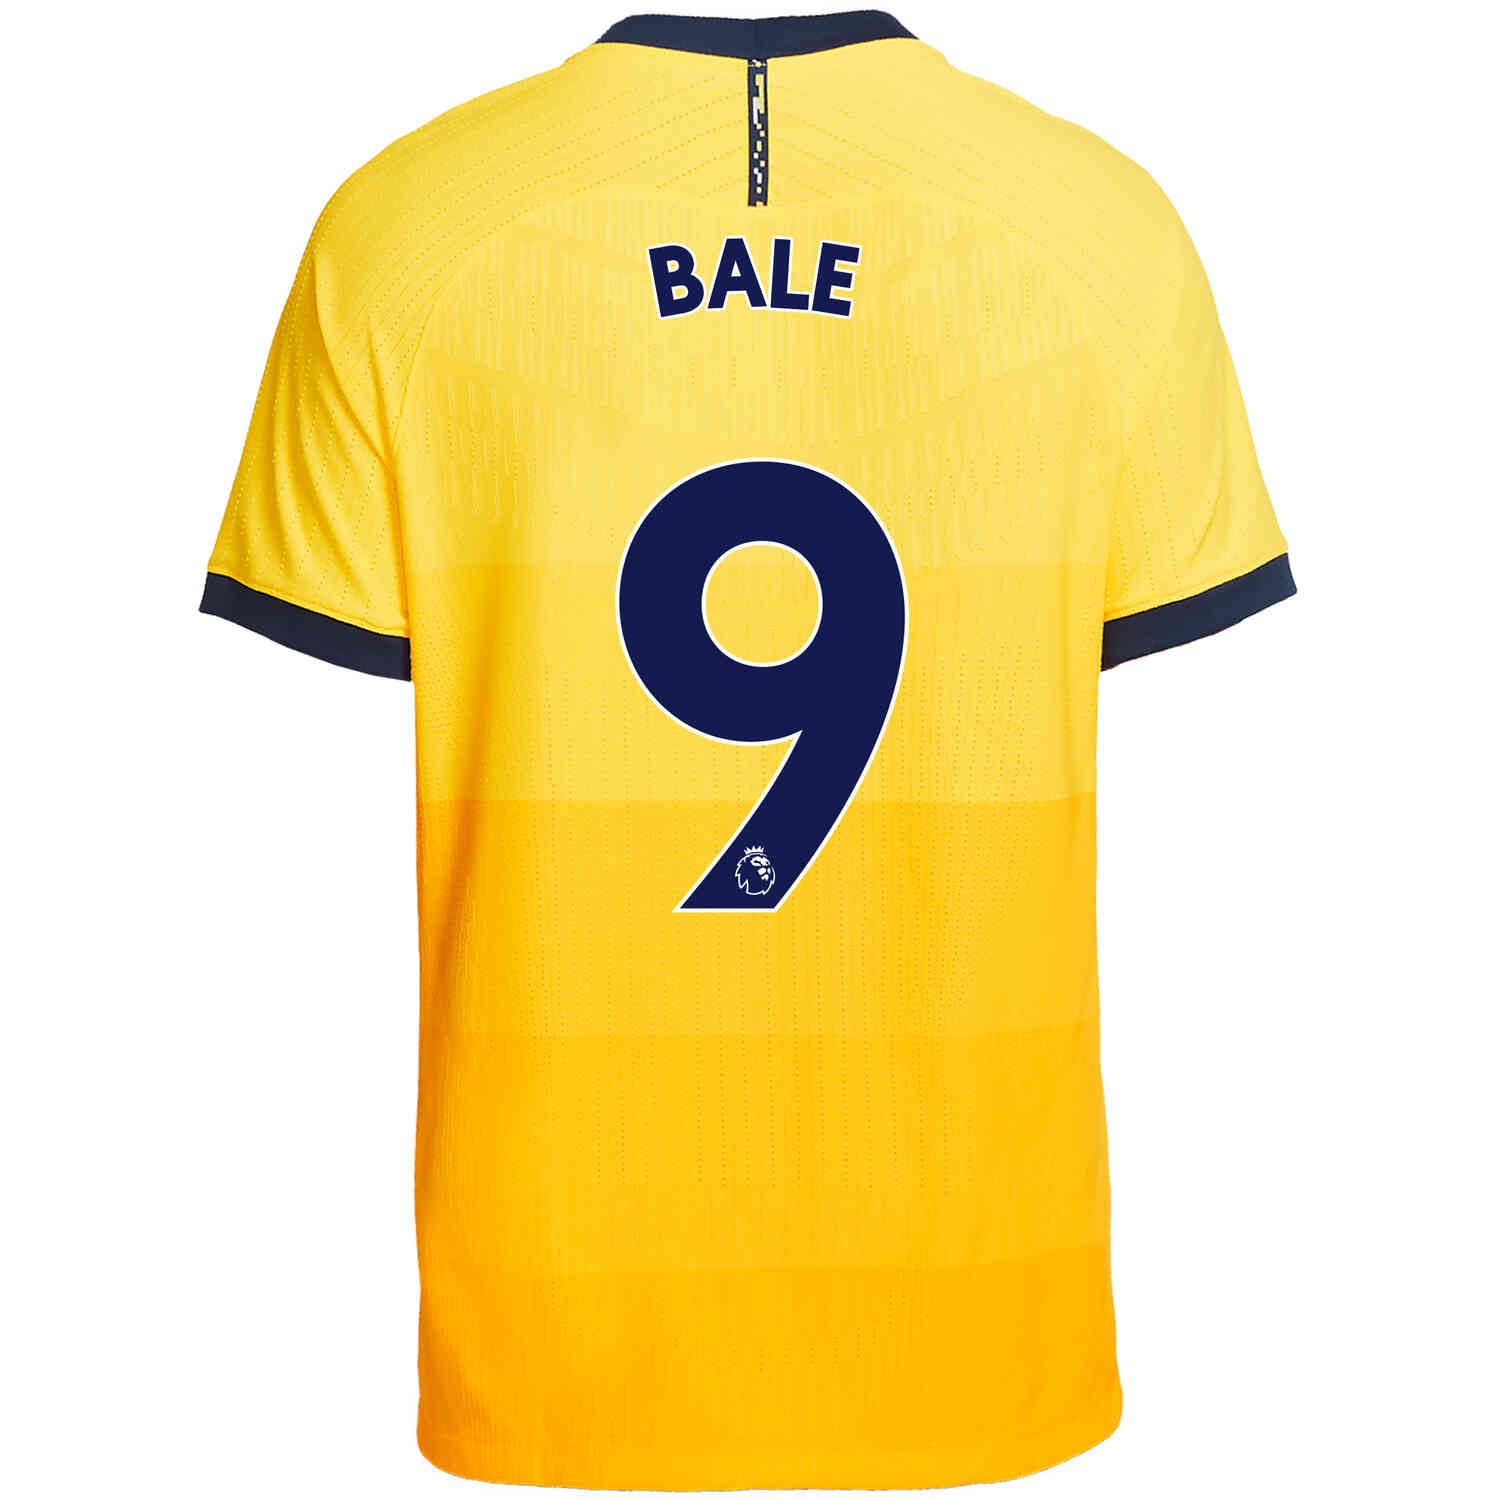 2020/21 Nike Gareth Bale Tottenham 3rd Match Jersey